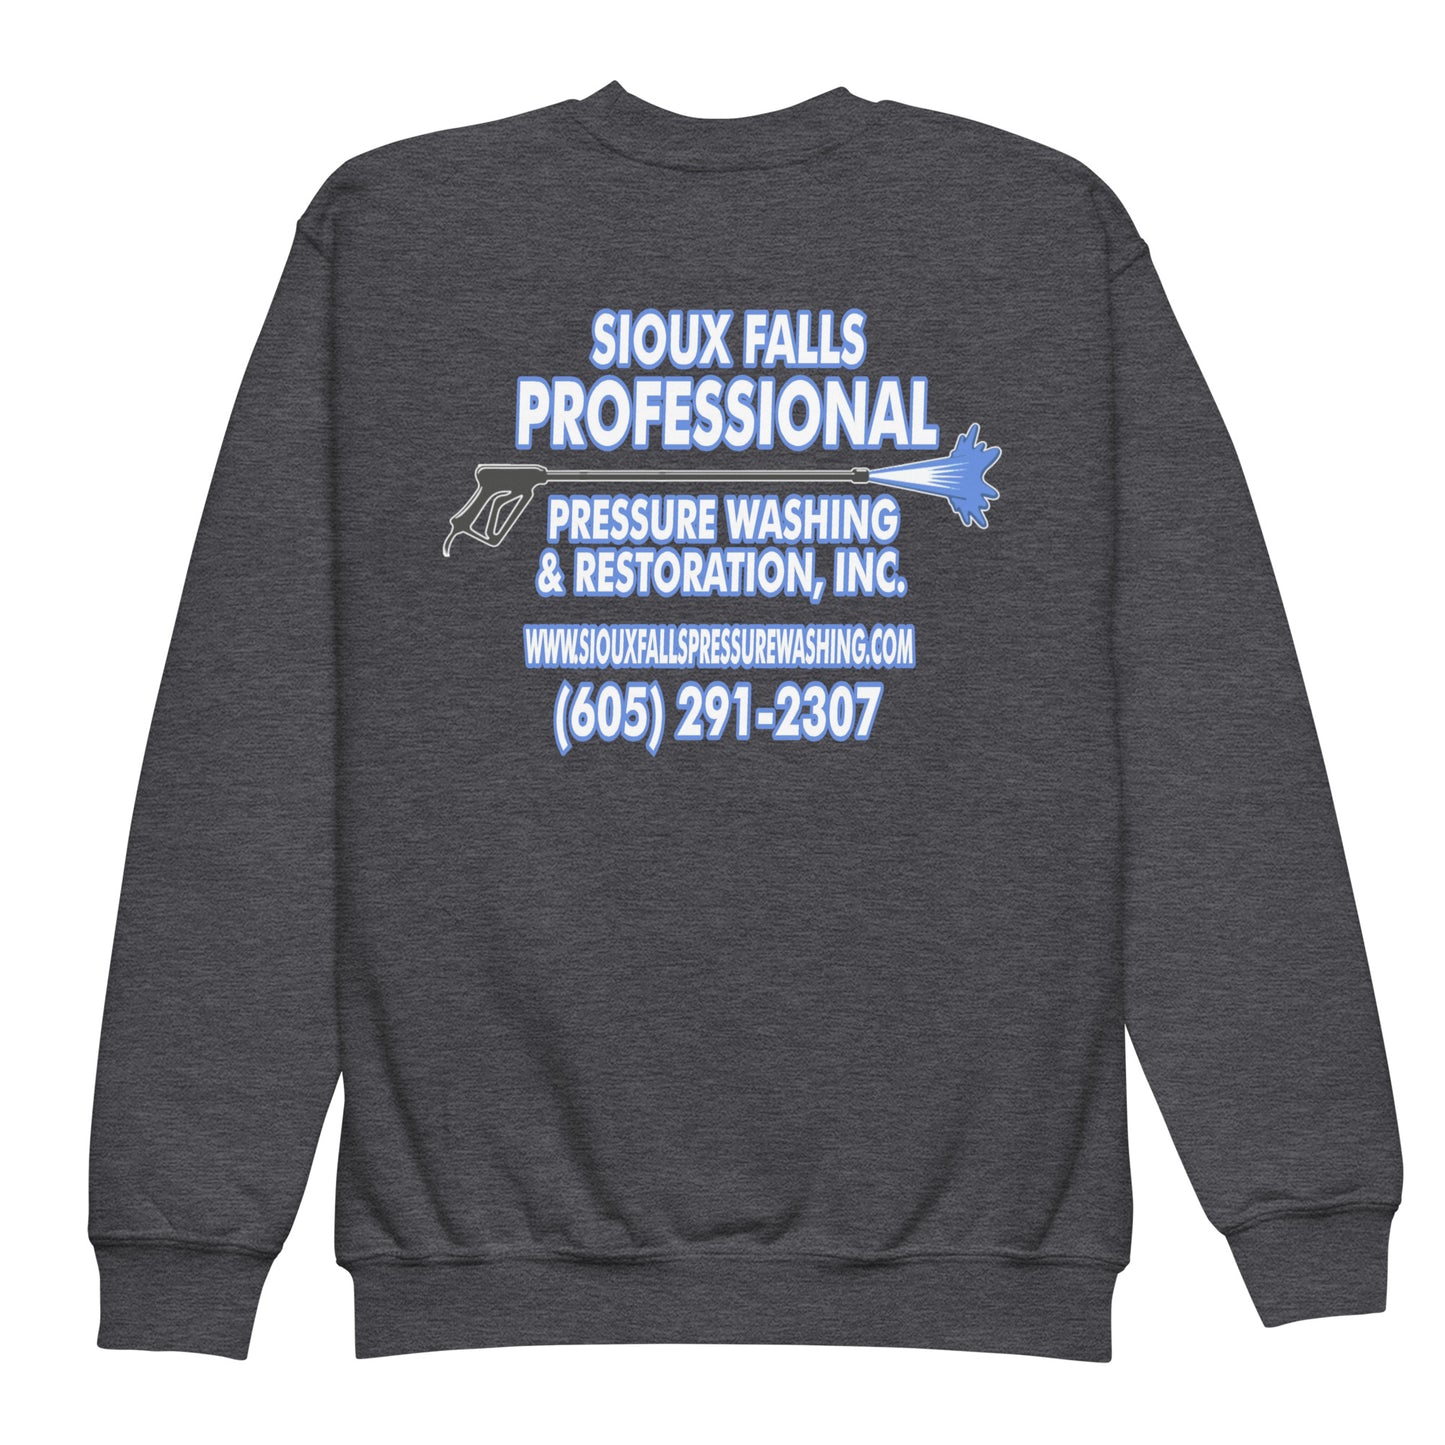 Sioux Falls Professional Pressure Washing & Restoration Inc. Kids Crew Sweatshirt